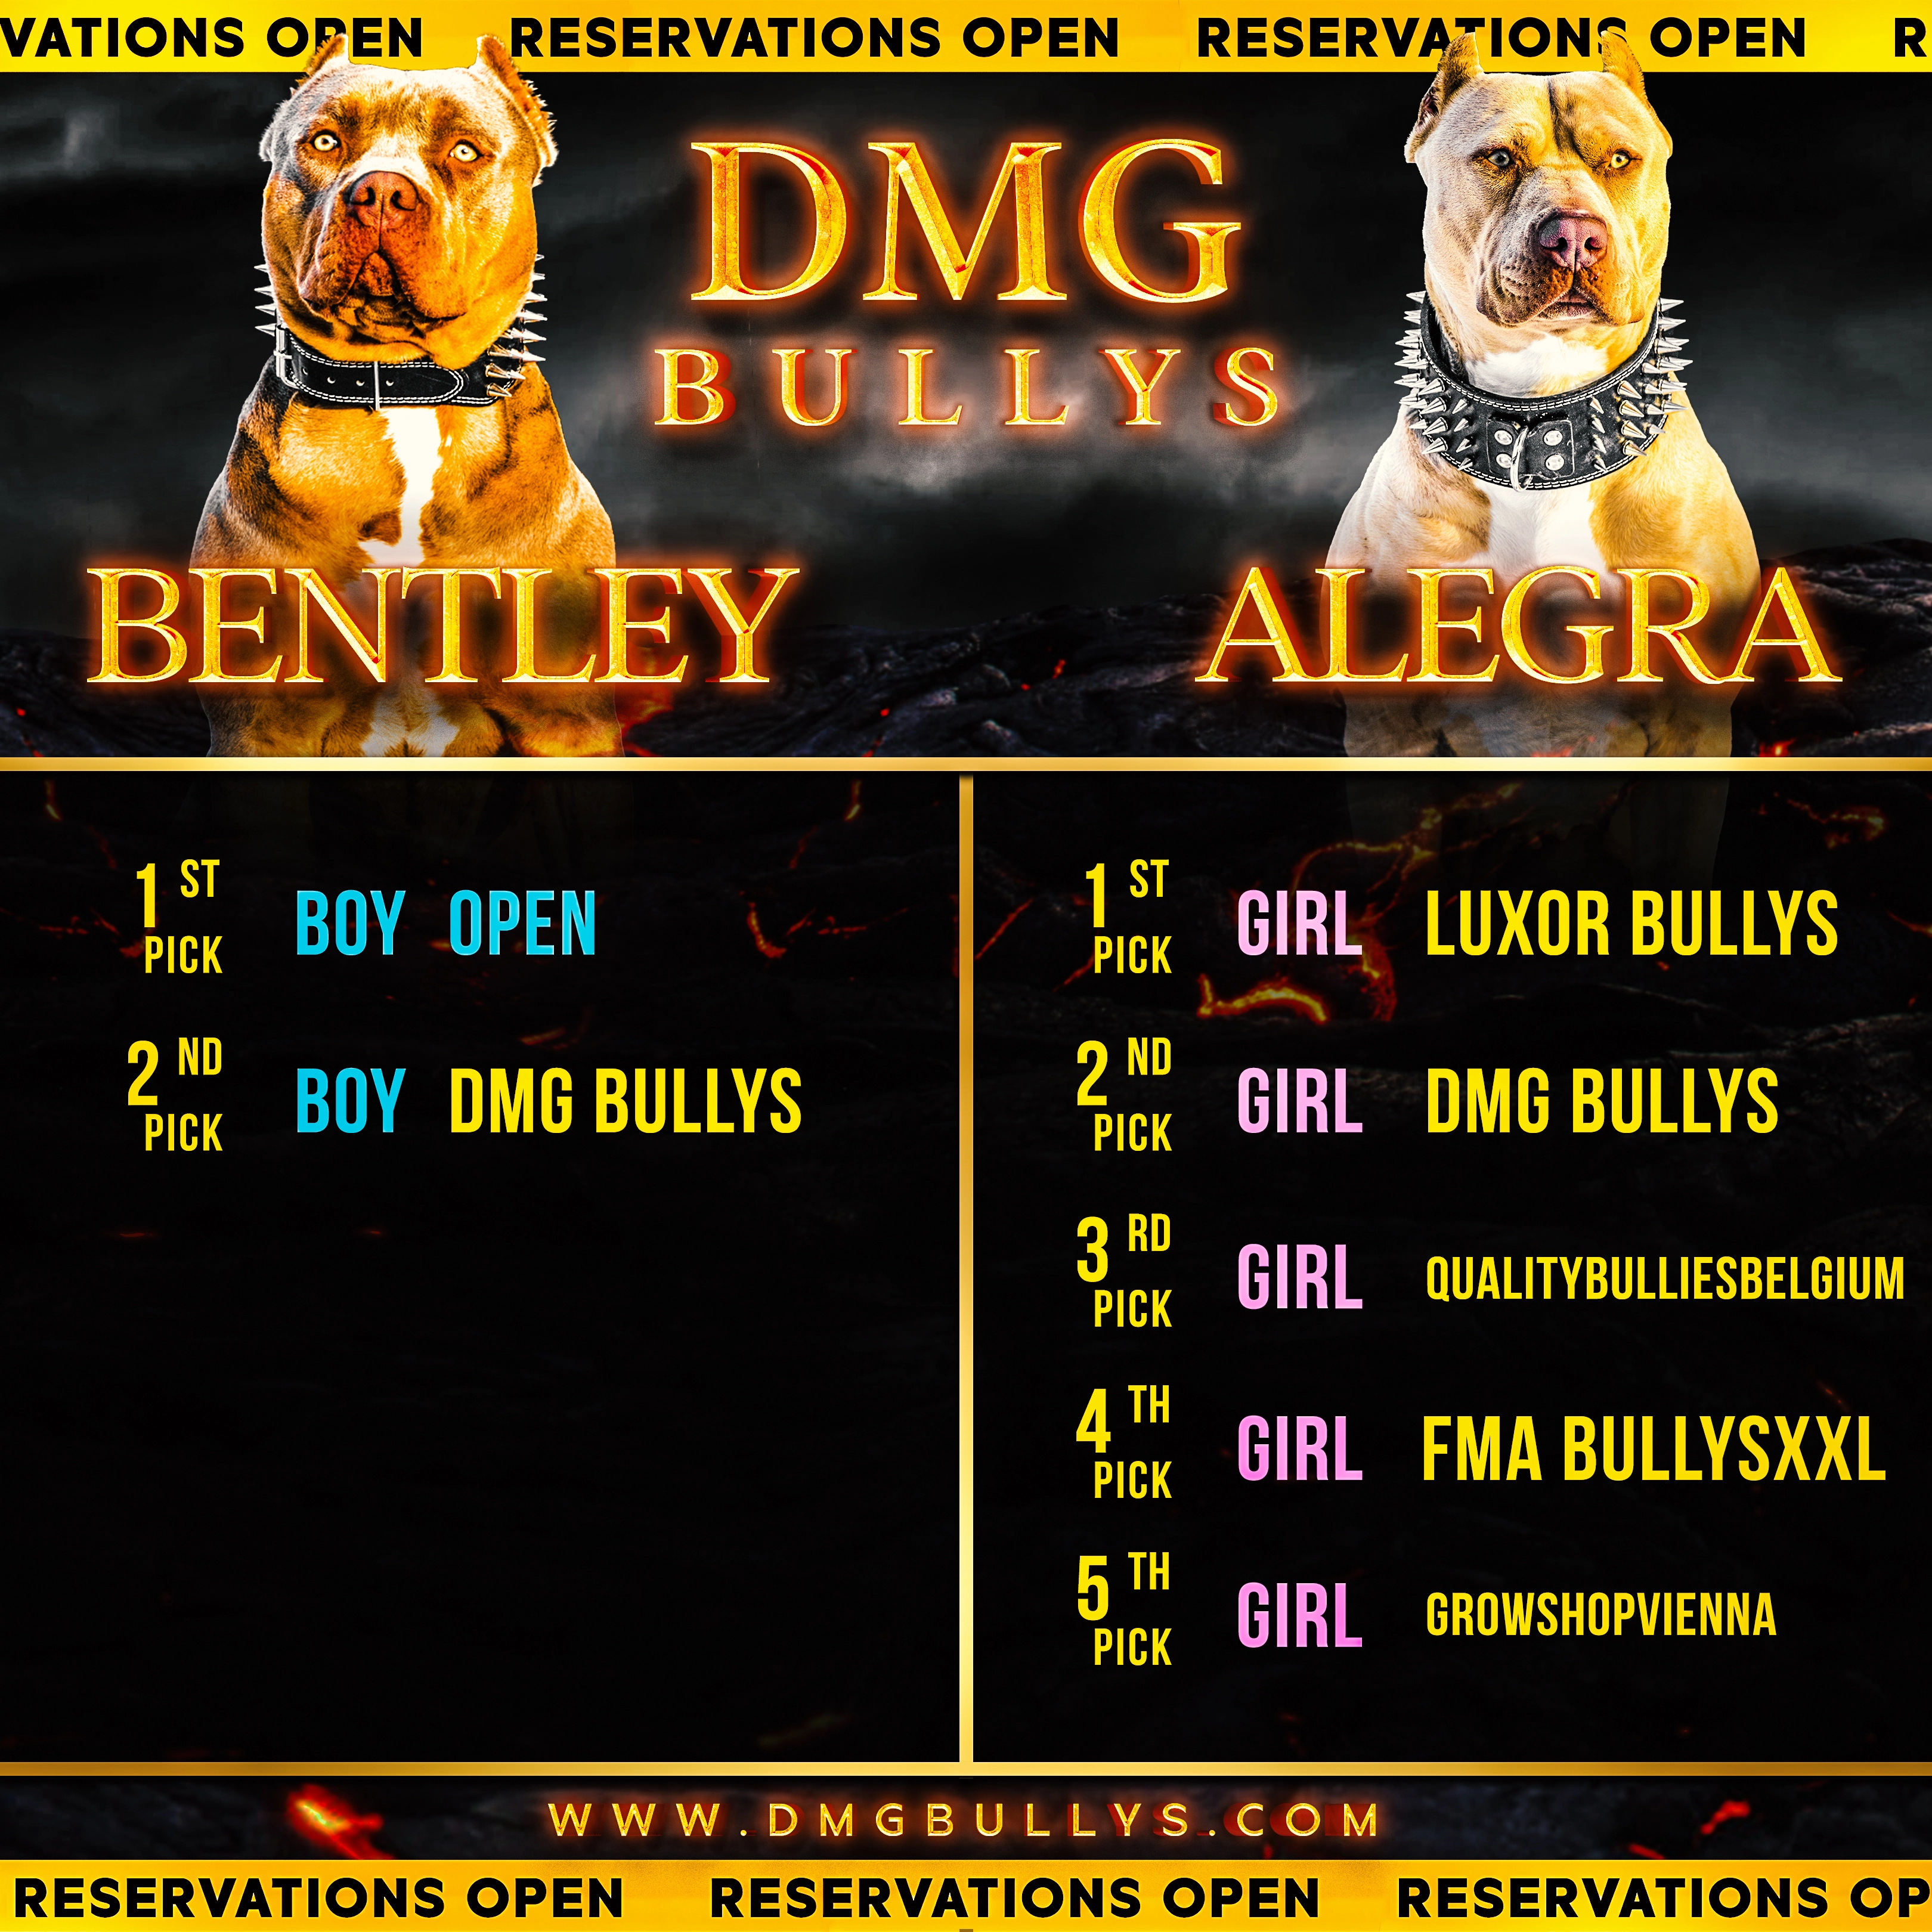 DMG Bullys puppies